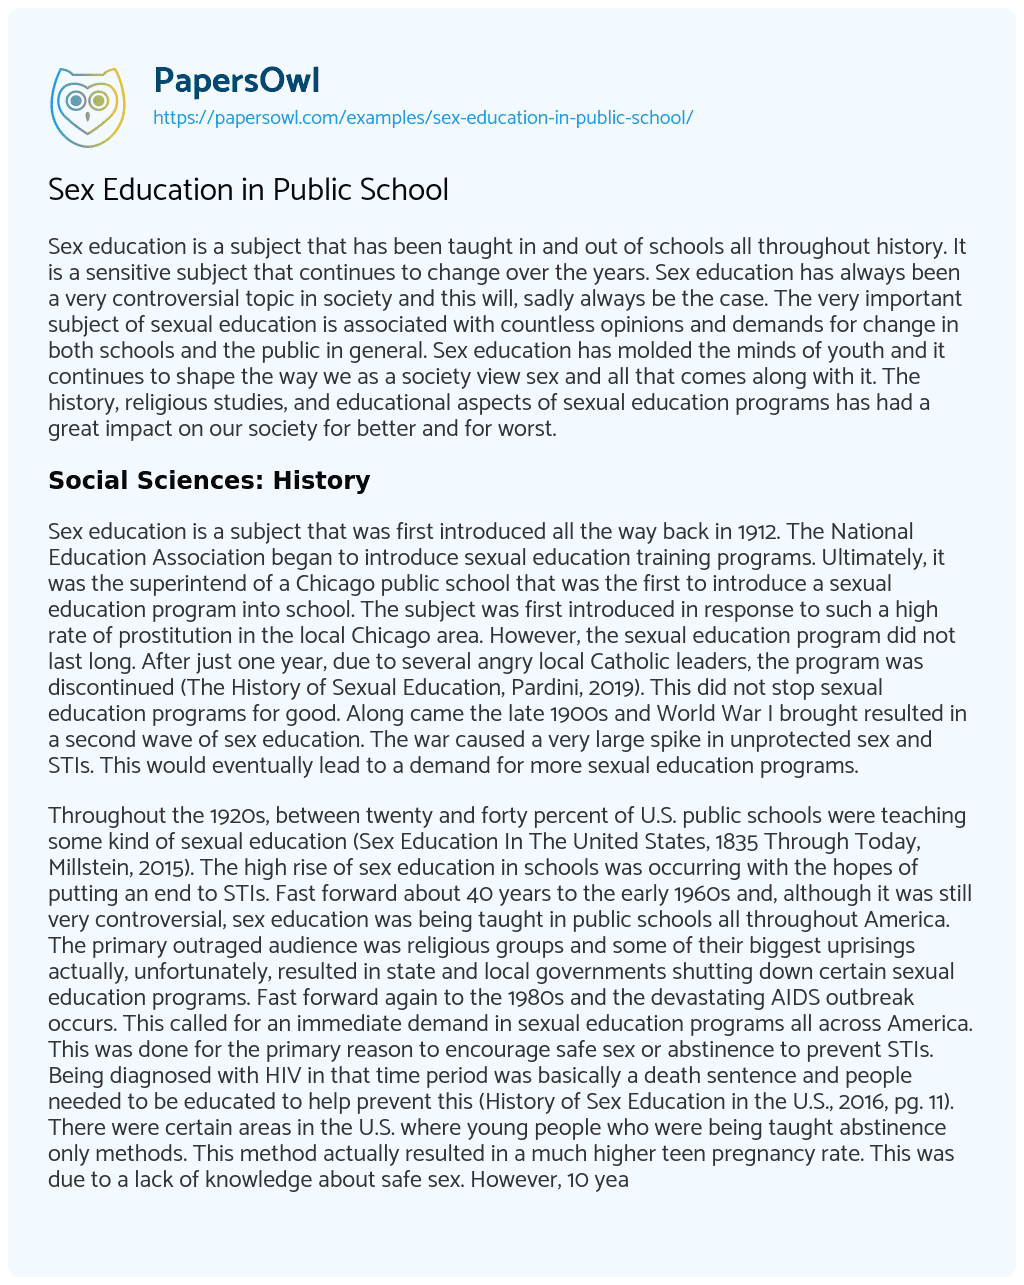 Sex Education in Public School essay